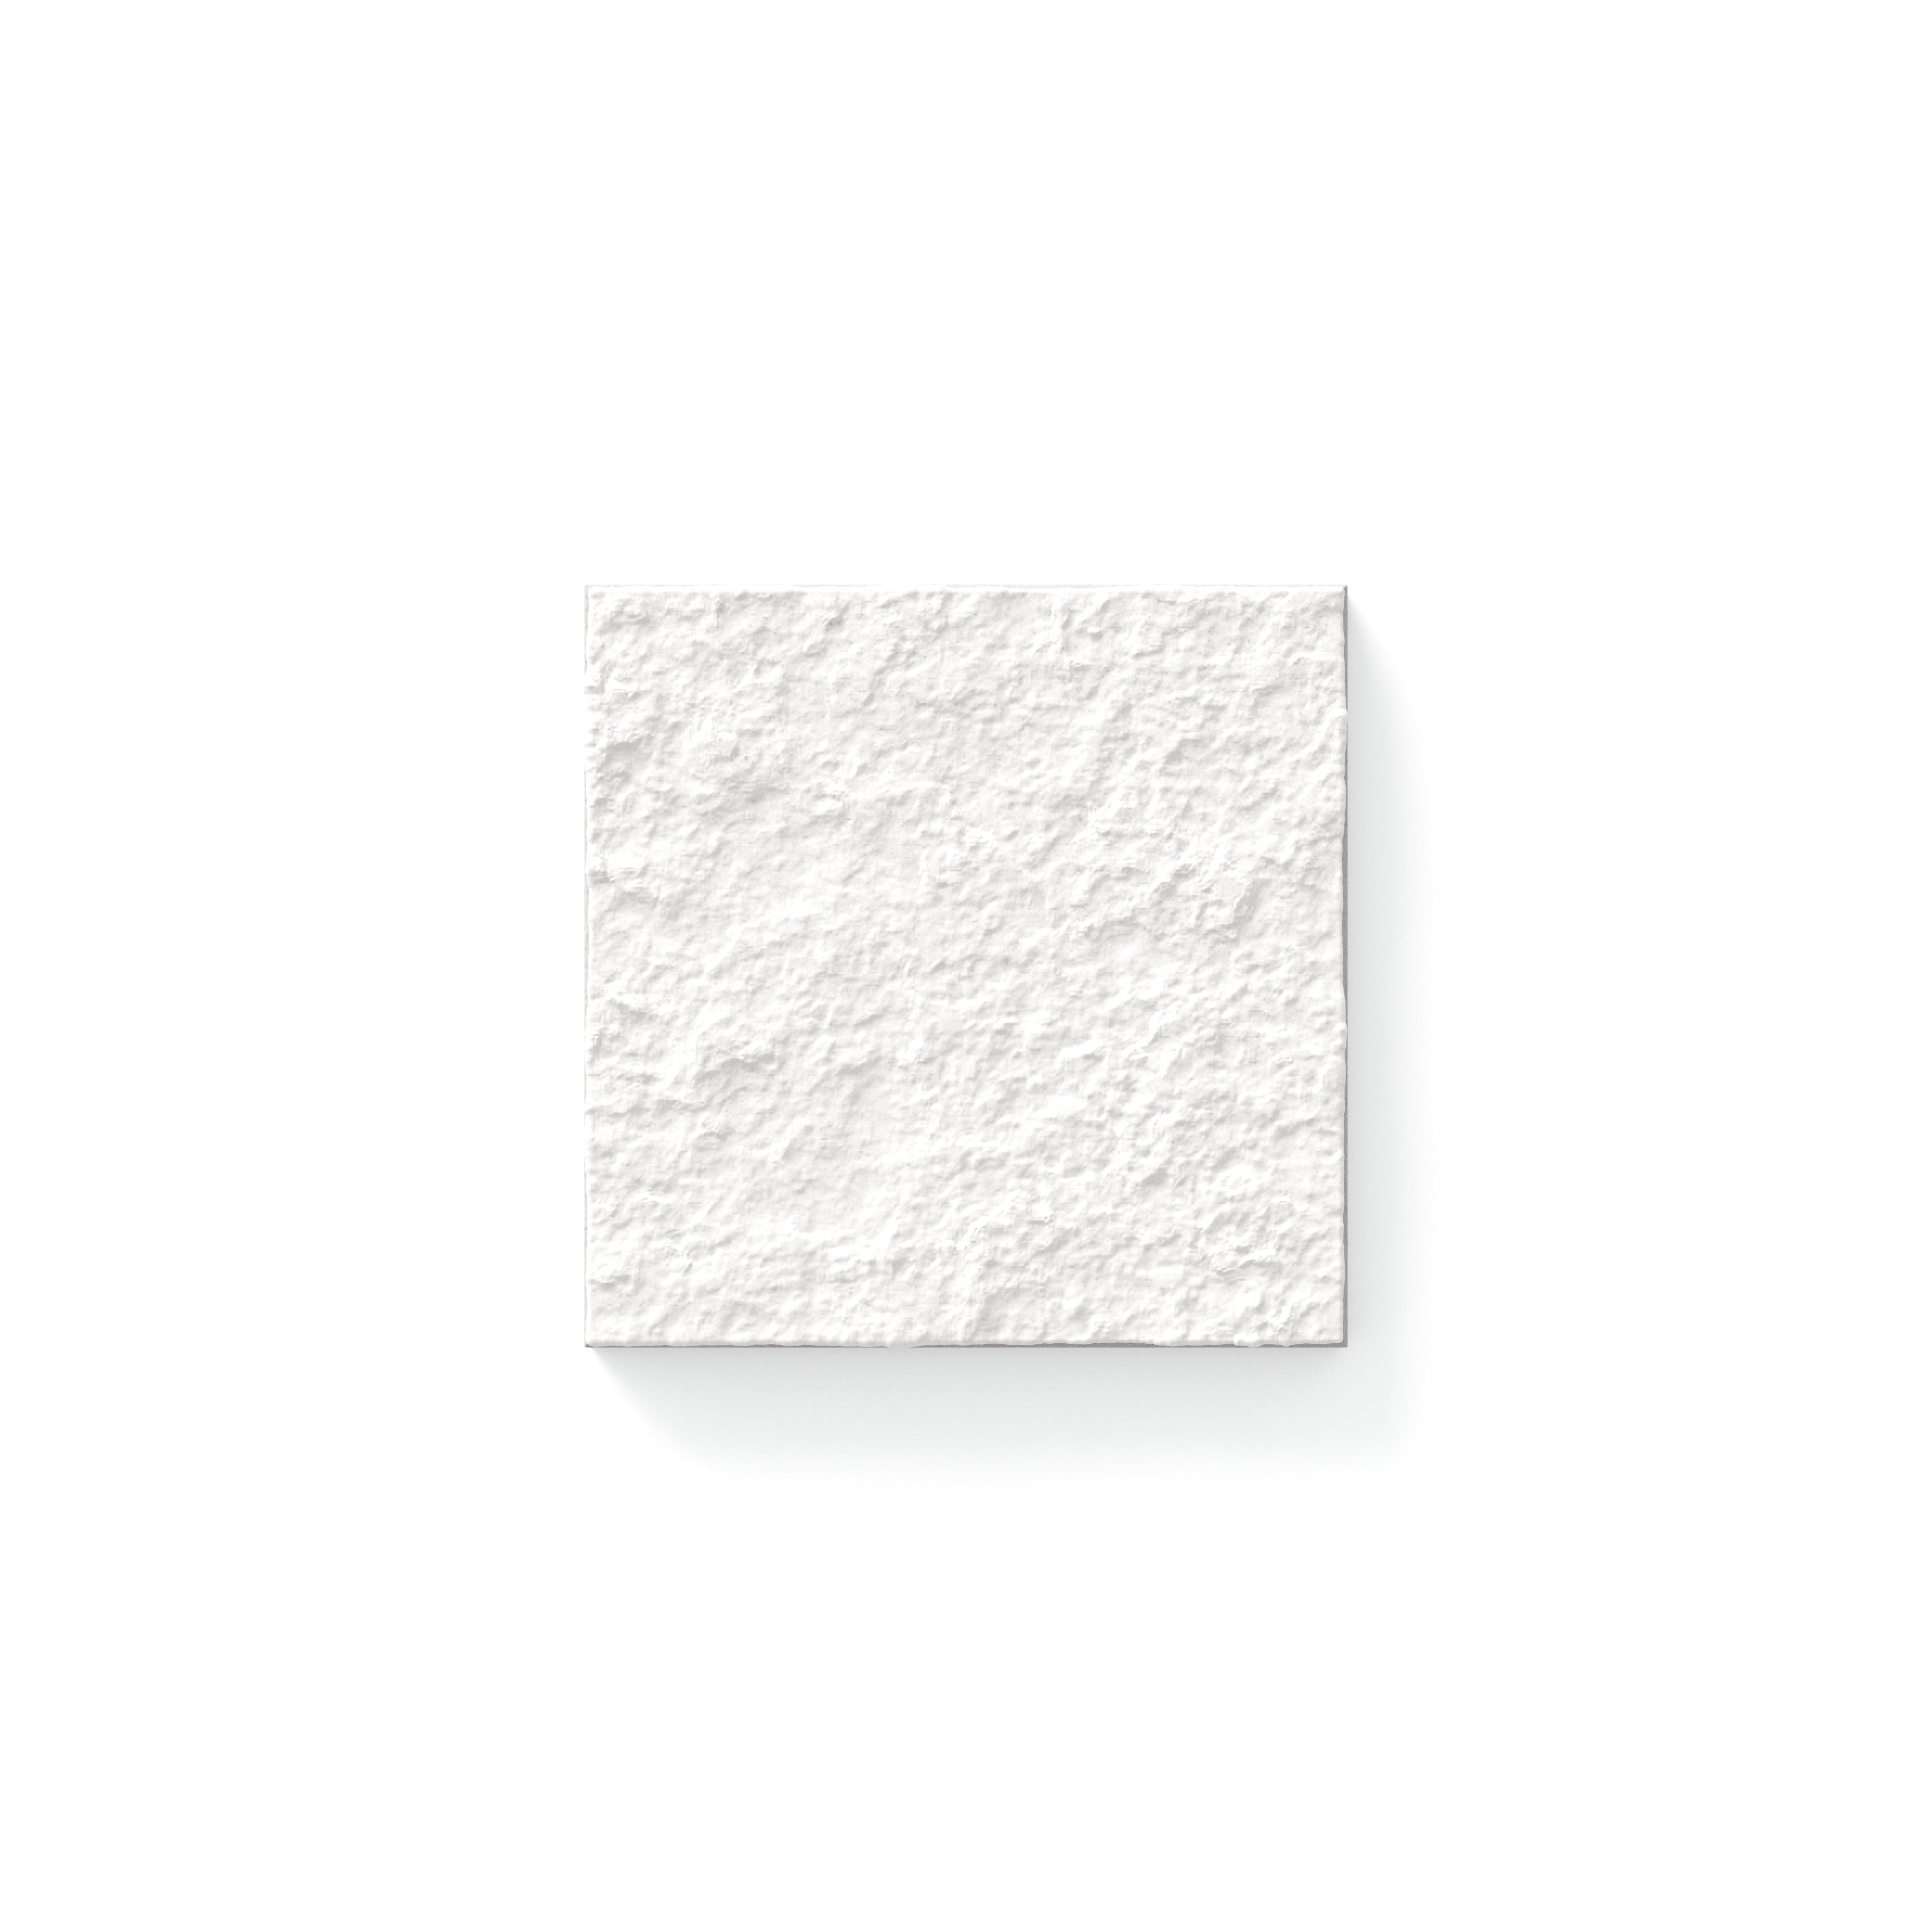 Palmer Raw White 4x4 Tile Sample